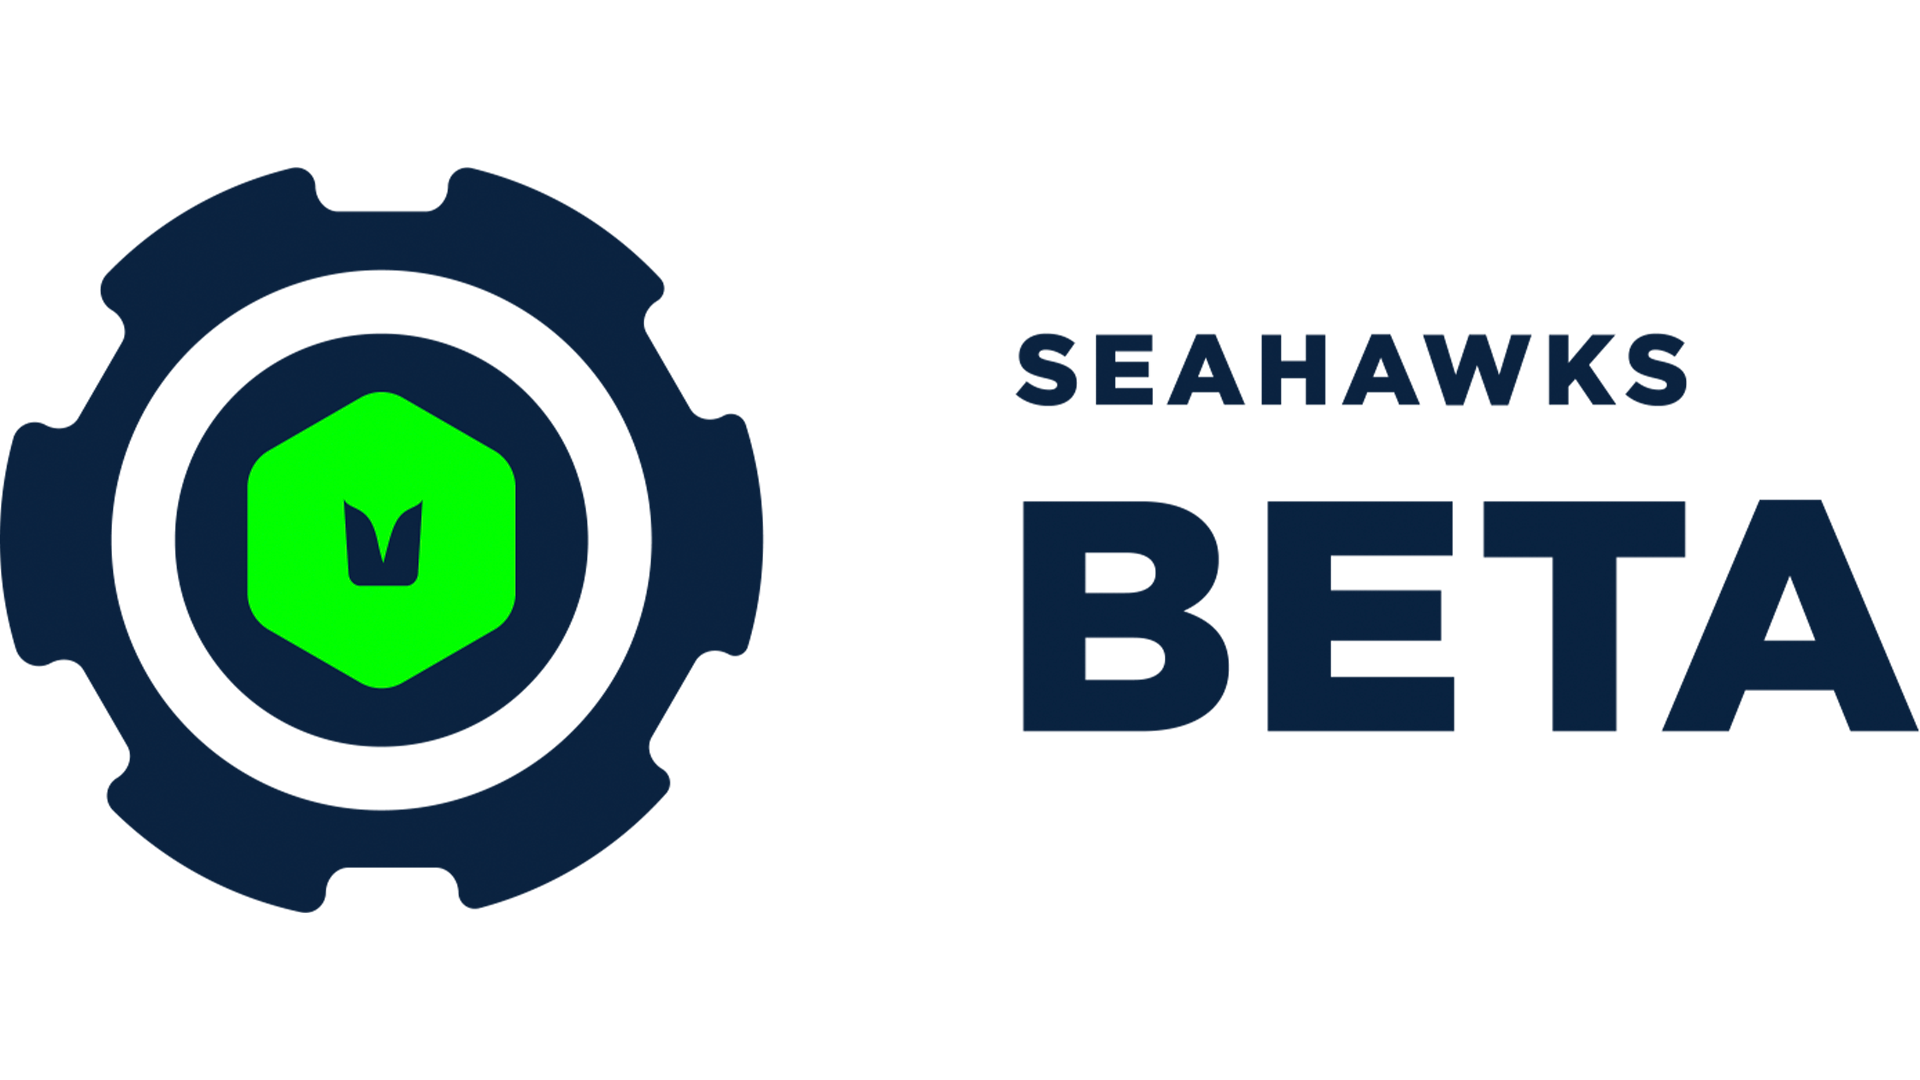 220128-seahawks-beta-logo-1920